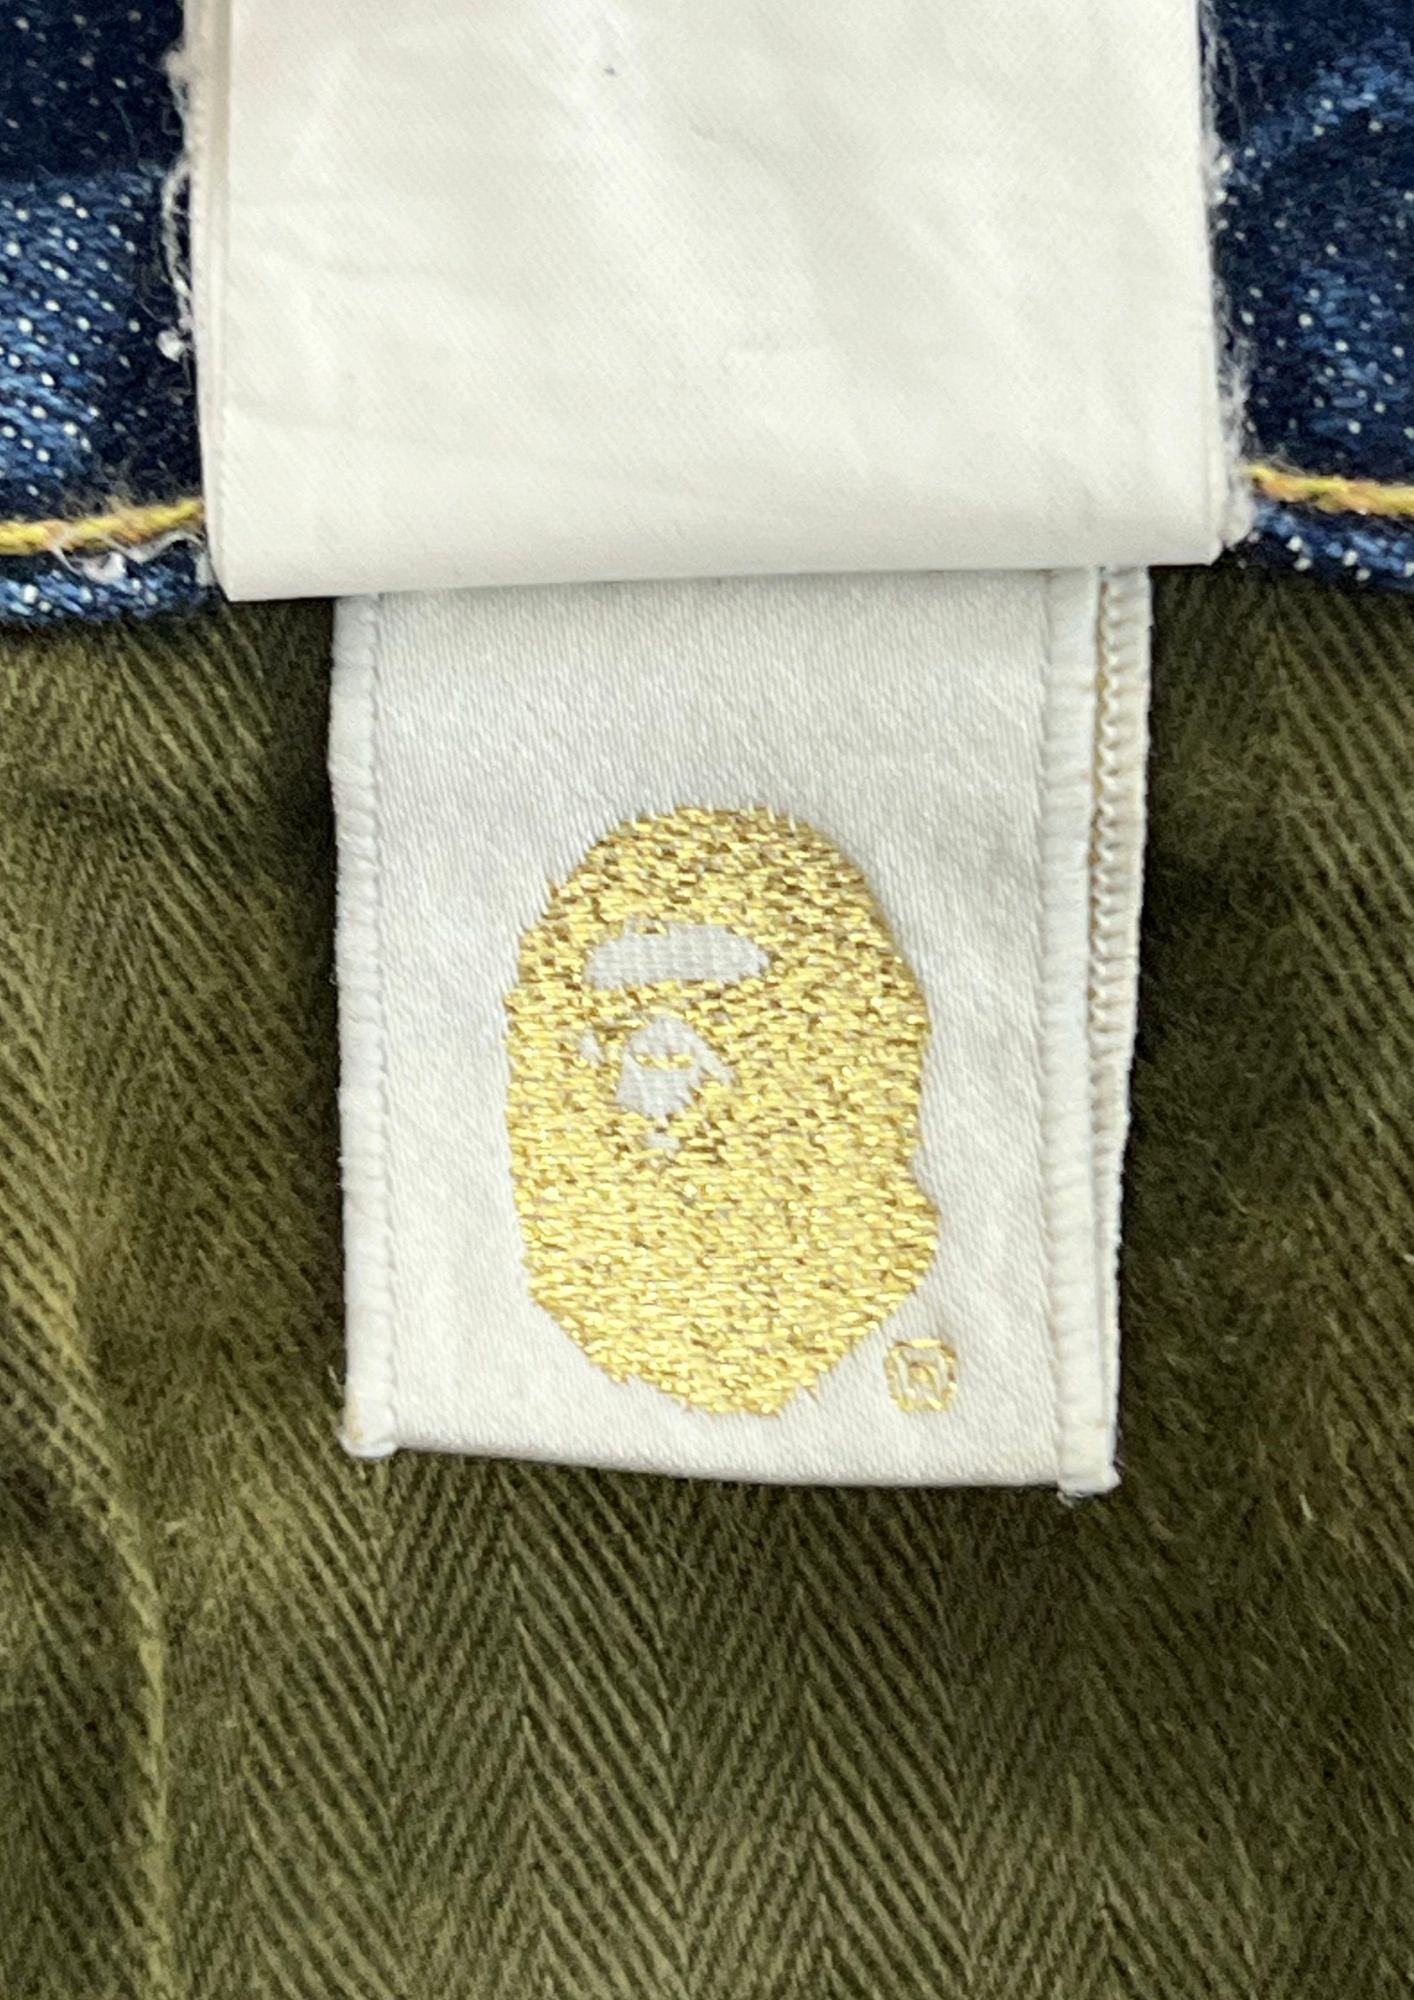 2010s BAPE Baby Milo Embroidered Denim Shorts